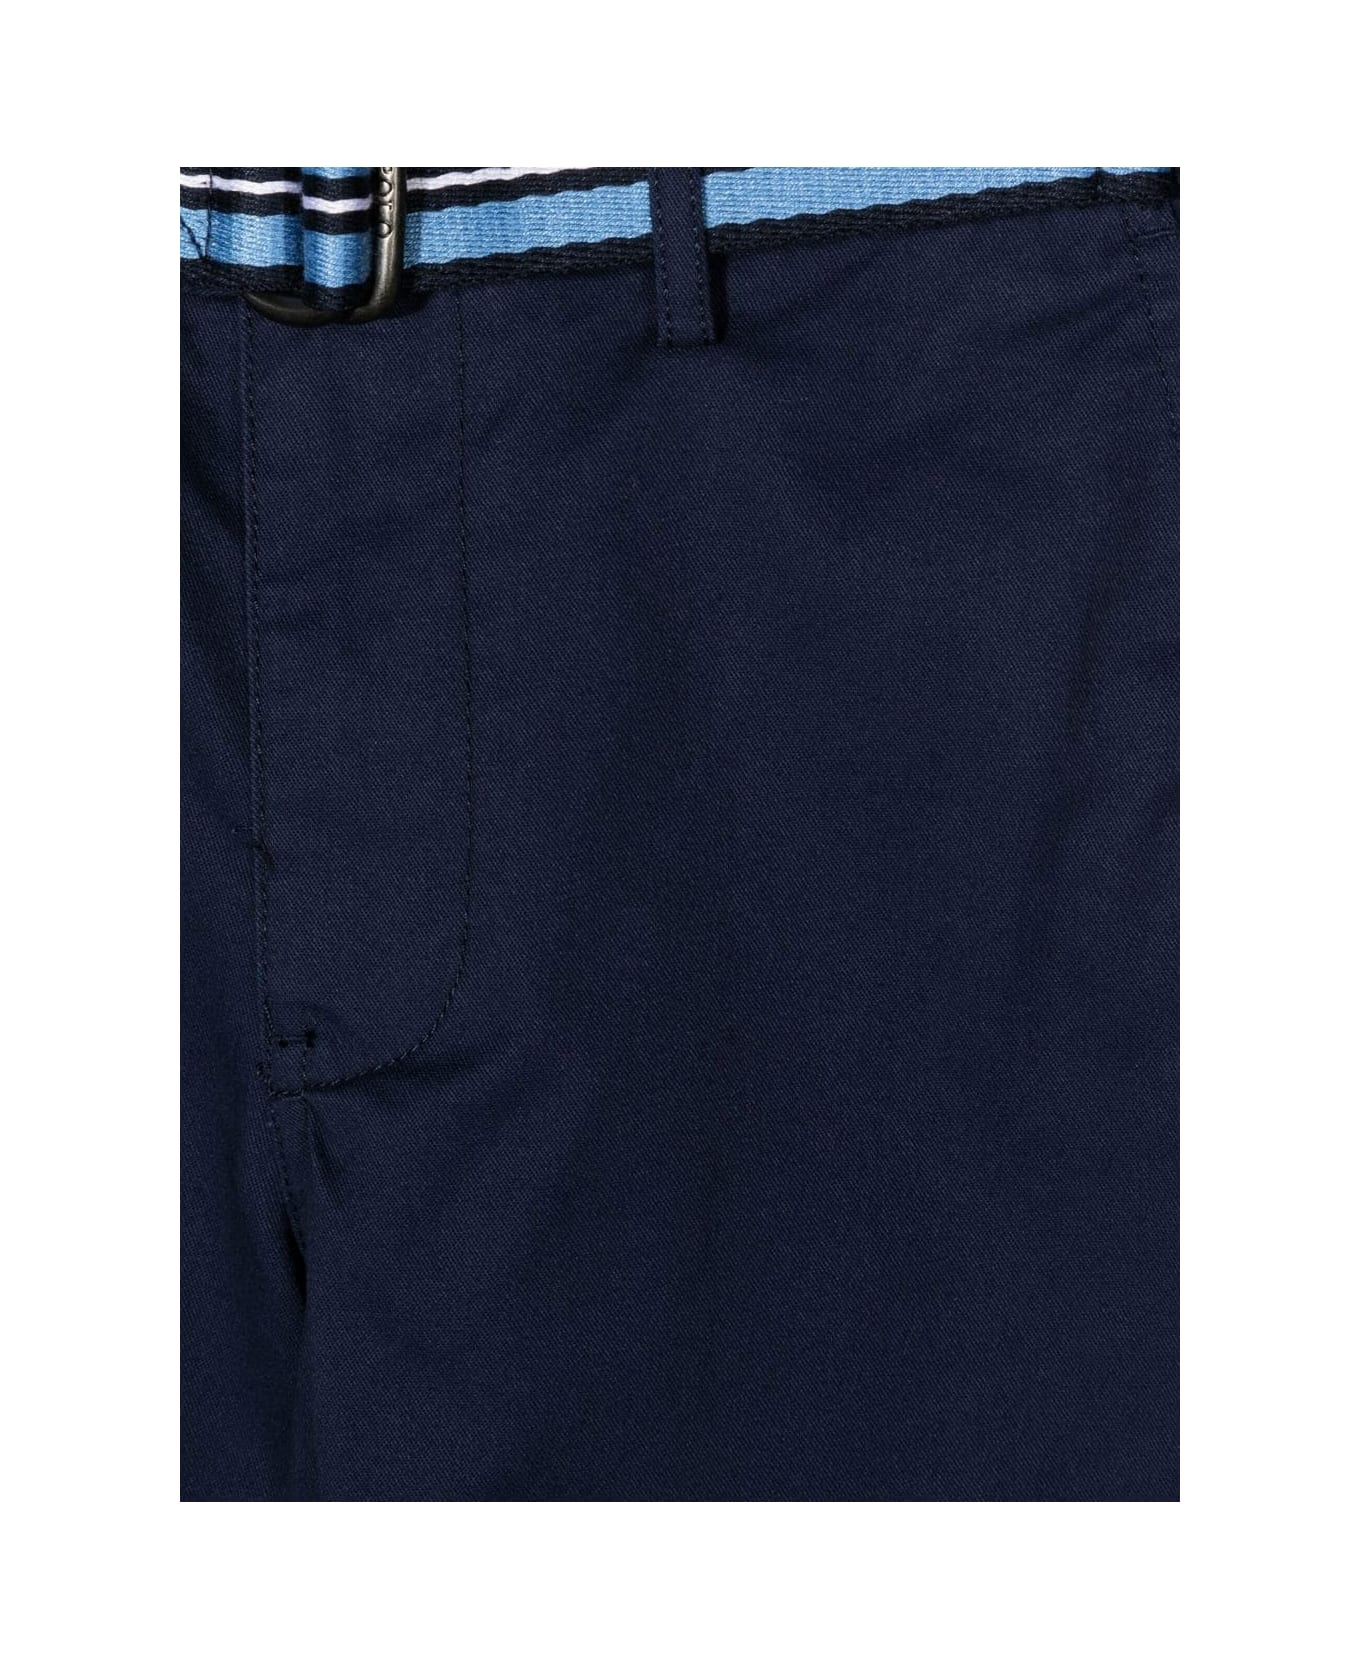 Ralph Lauren Shorts In Navy Blue Stretch Chino With Belt - Navy